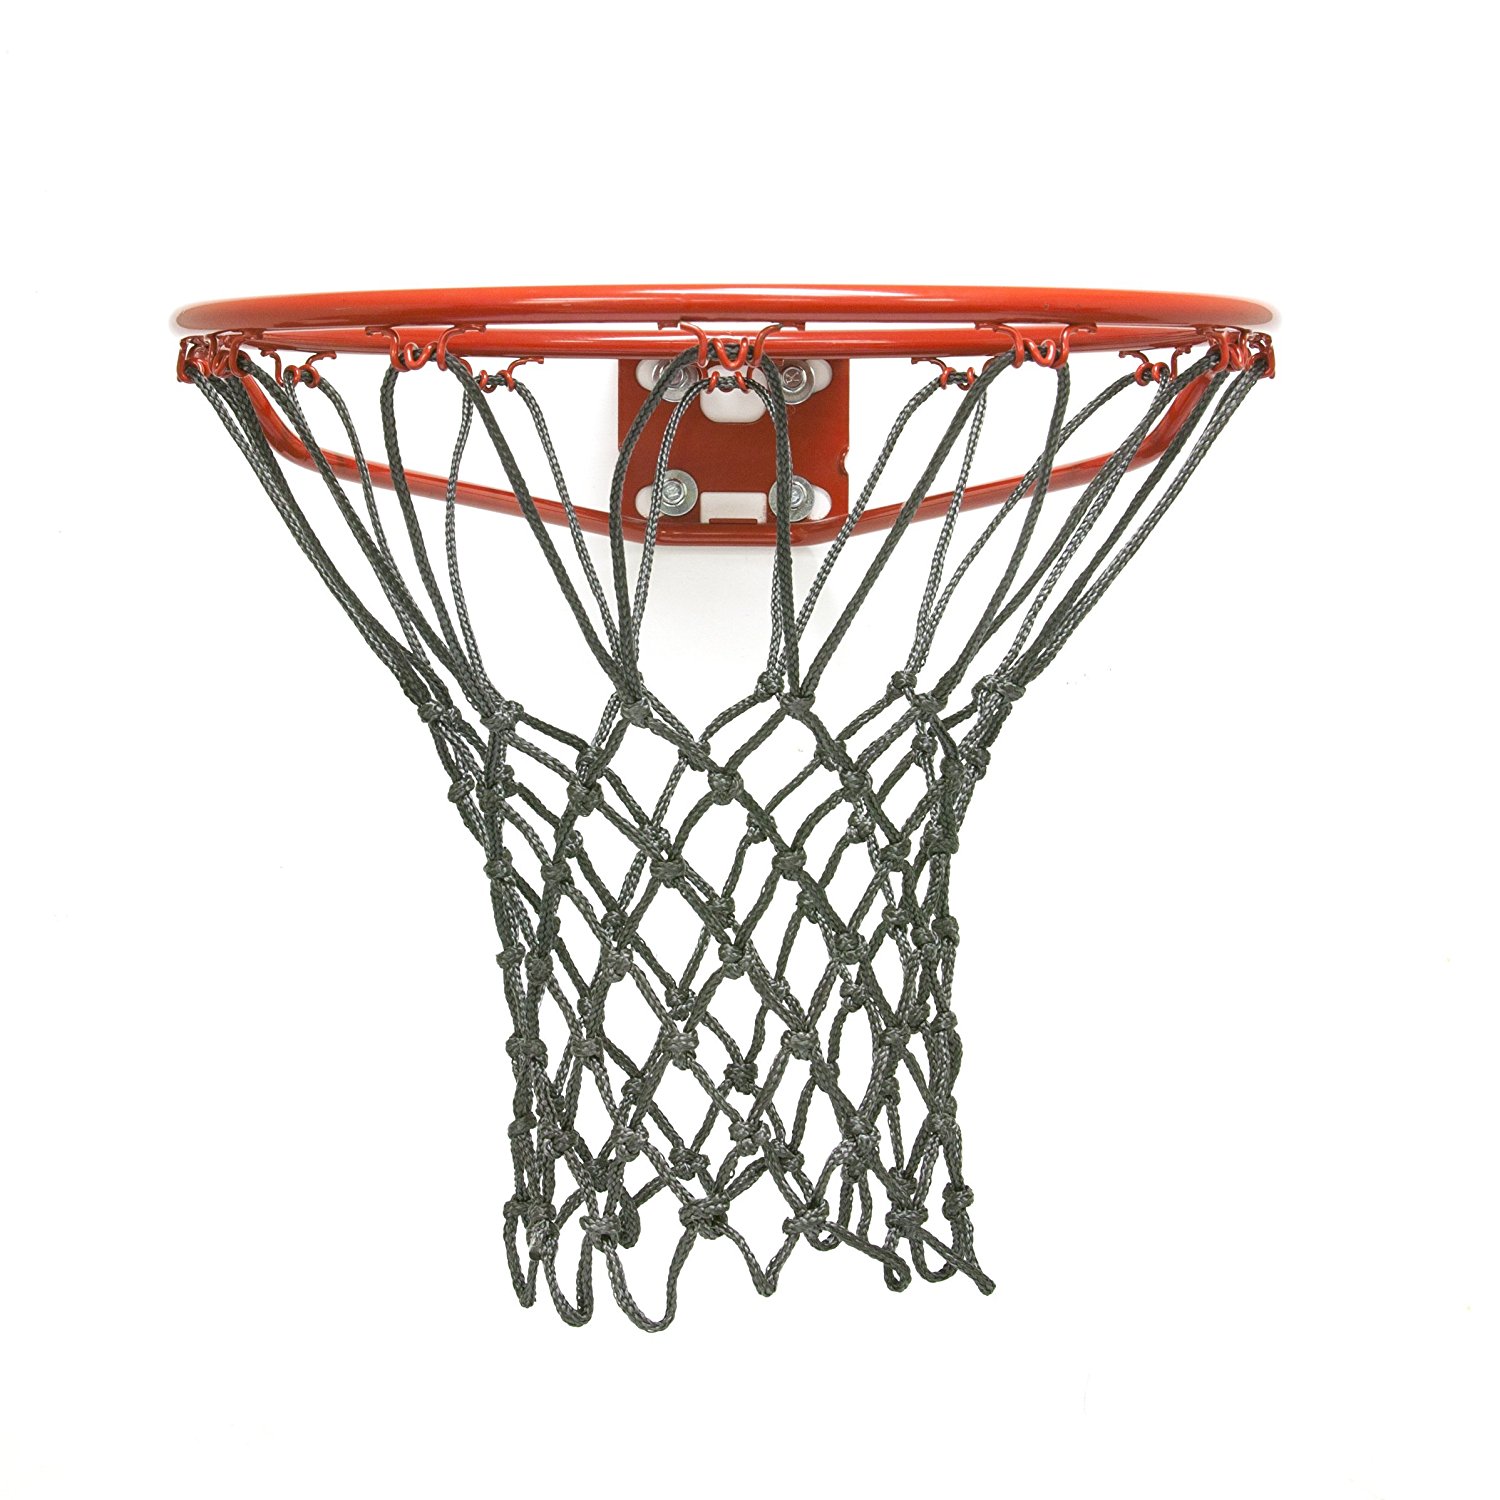 Free Basketball Rim Png, Download Free Basketball Rim Png png images